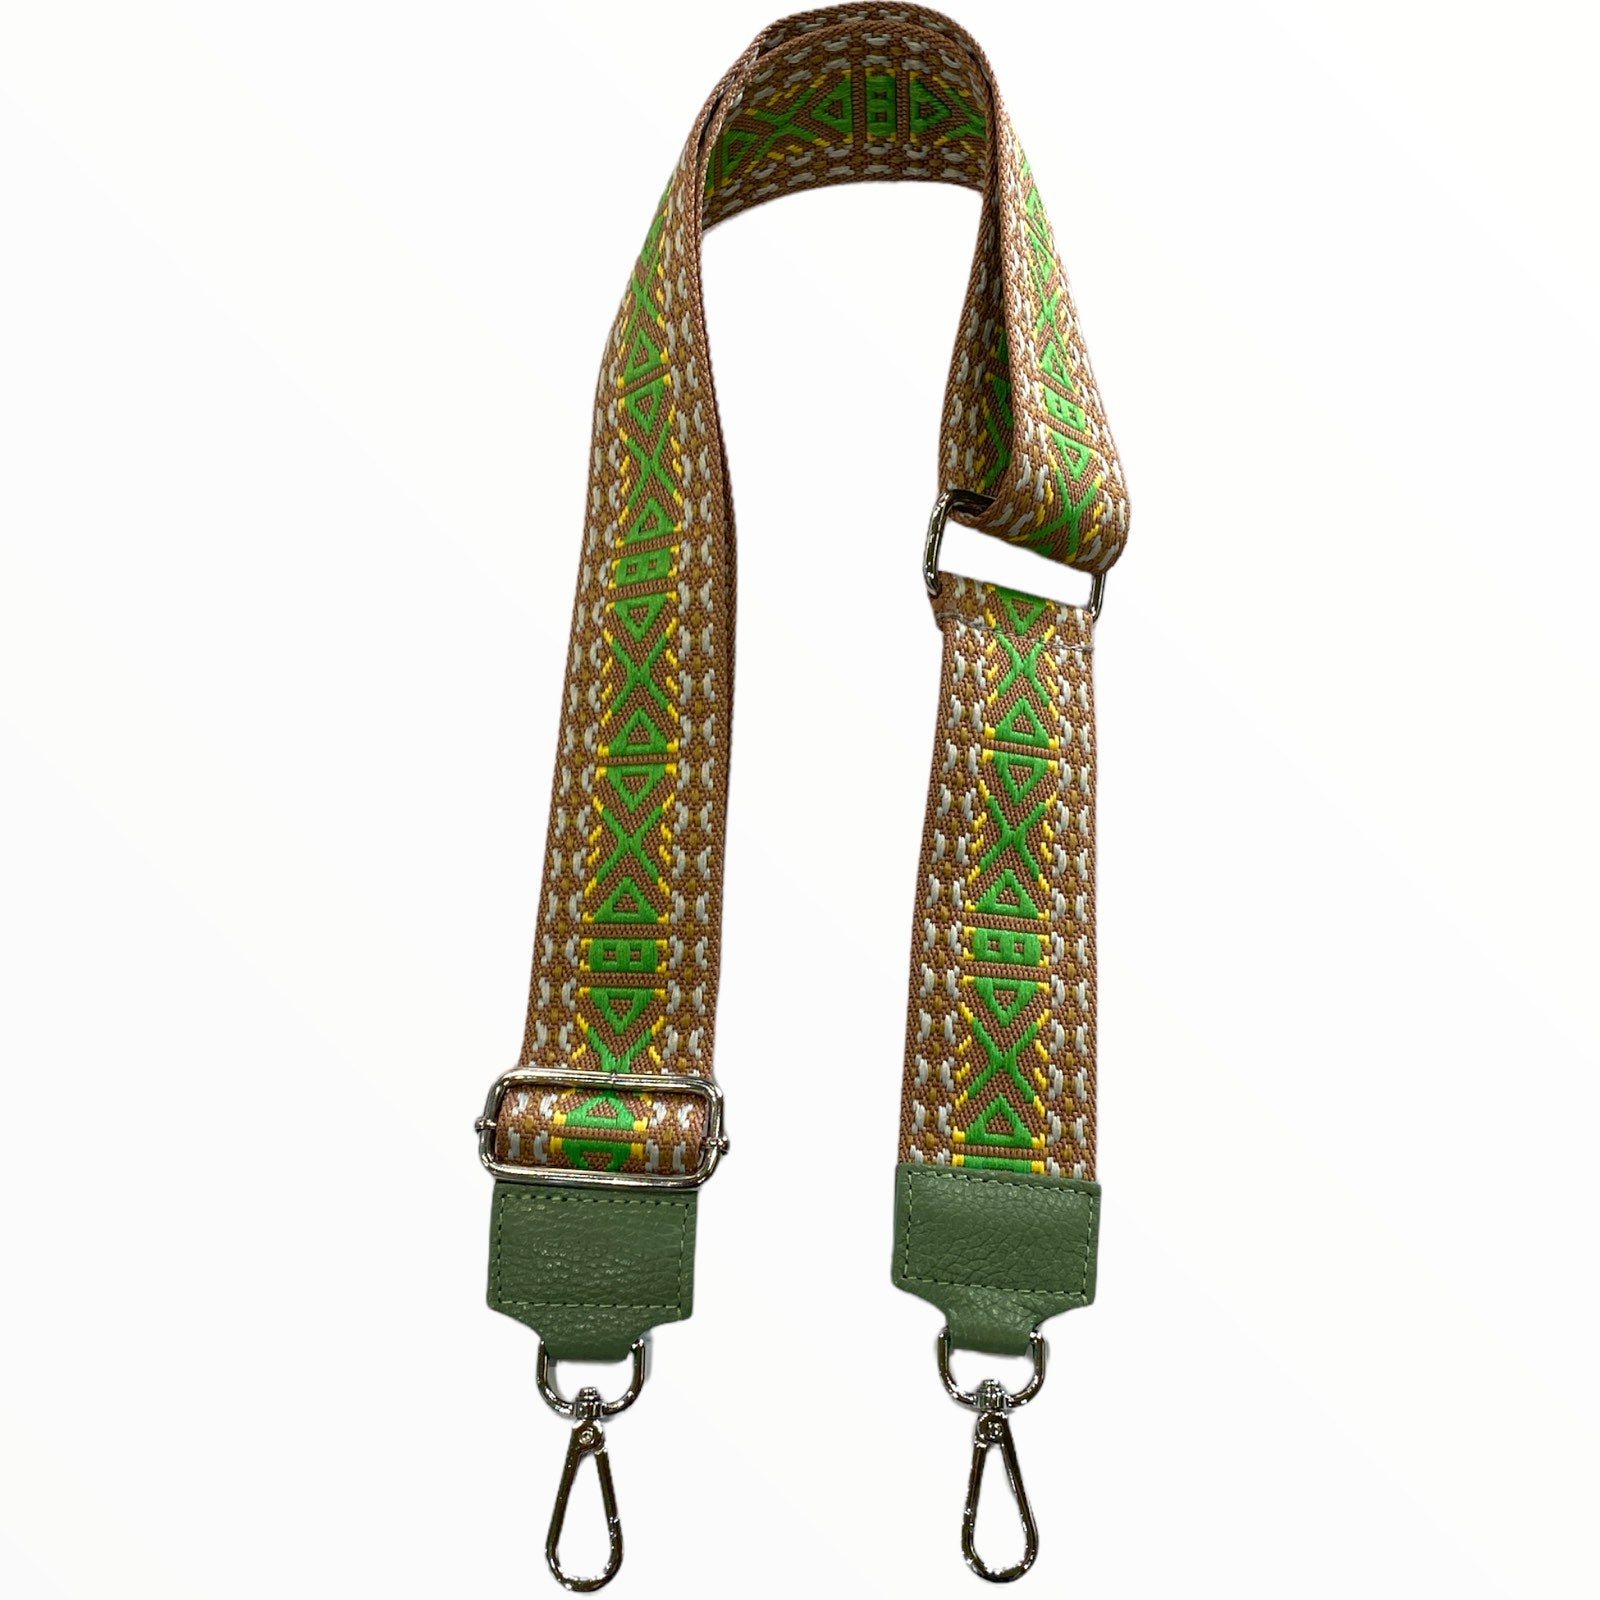 Green boho adjustable strap with leather details